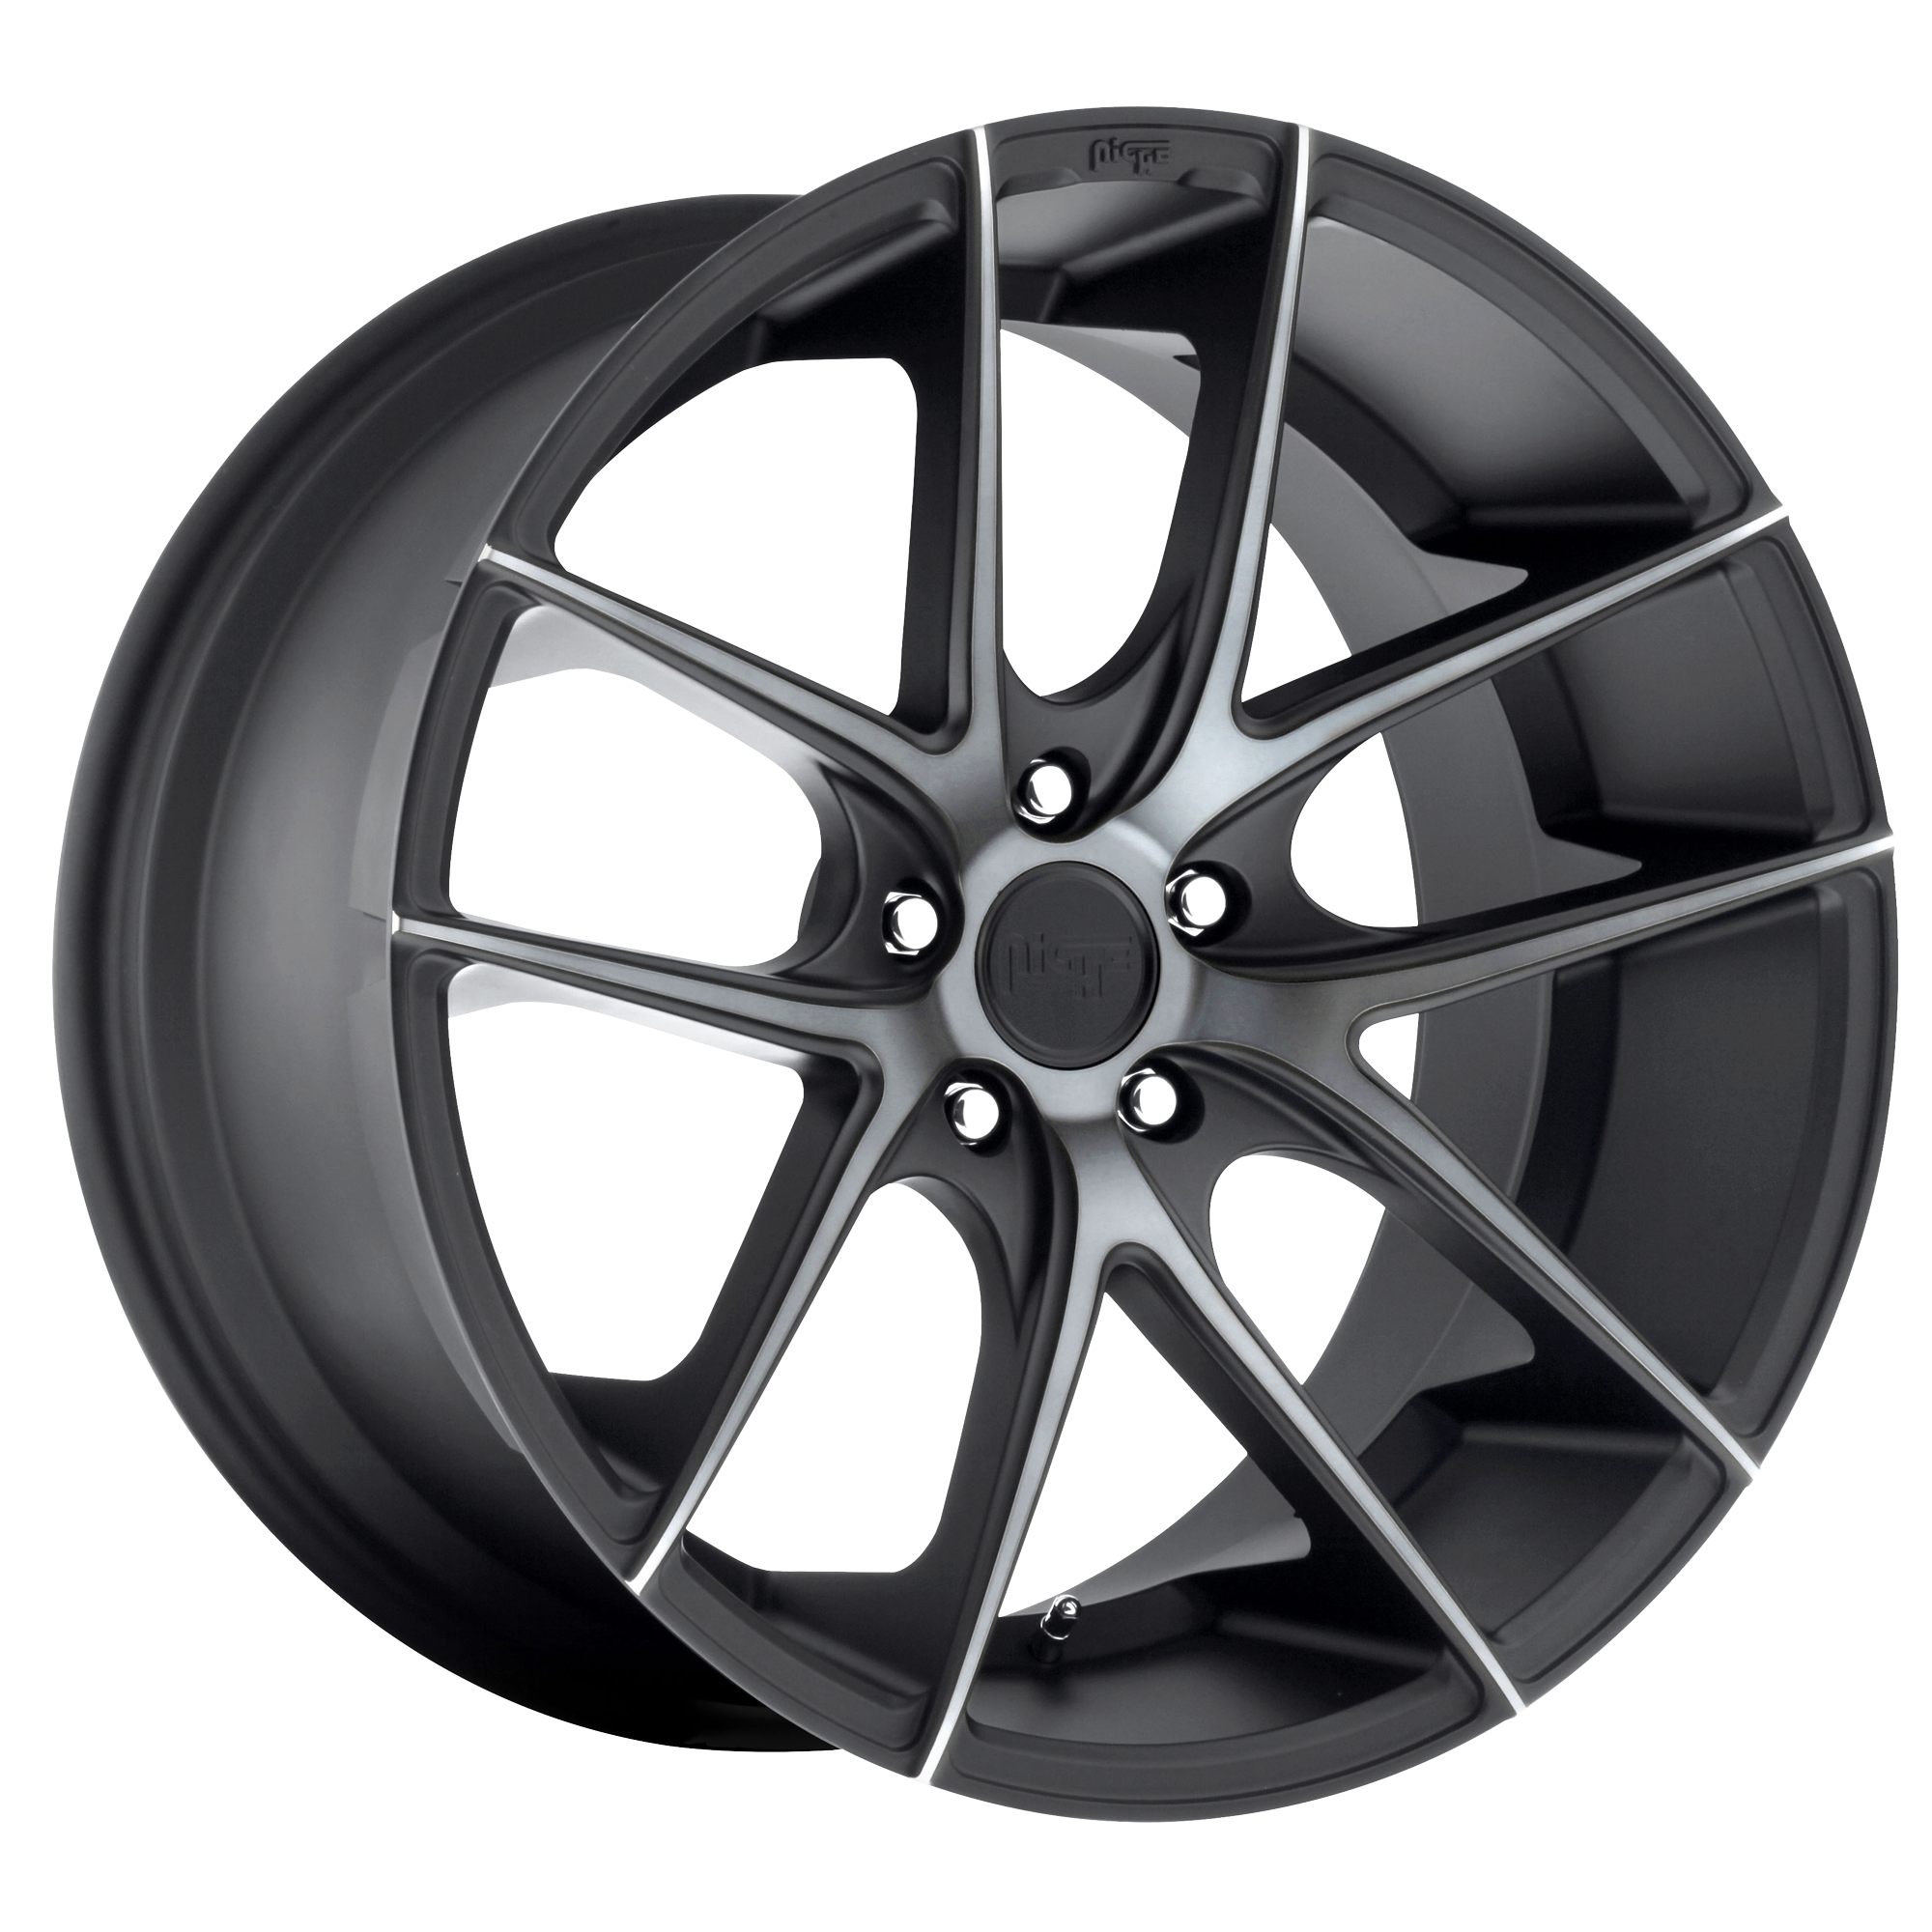 TARGA 20x10 5x120.00 MATTE BLACK DOUBLE DARK TINT (40 mm) - Tires and Engine Performance